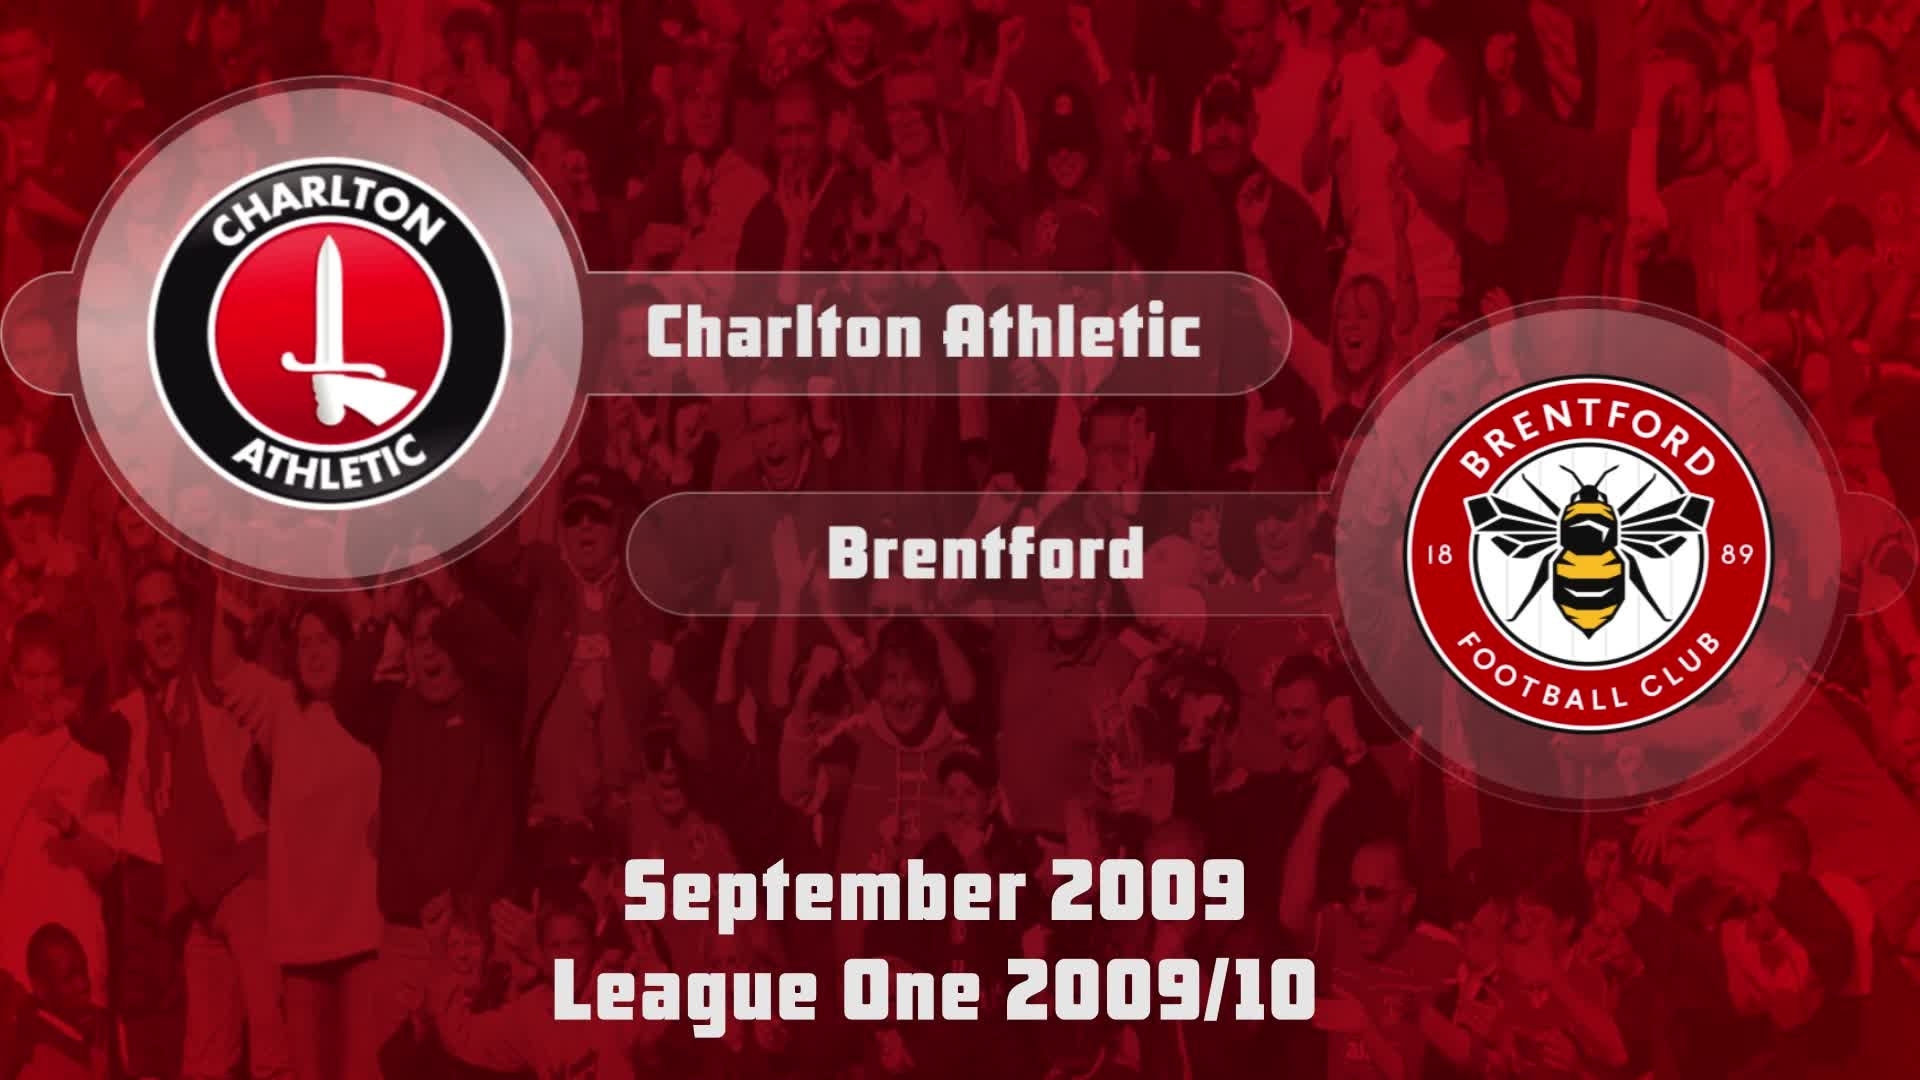 07 HIGHLIGHTS | Charlton 2 Brentford 0 (Sept 2009)